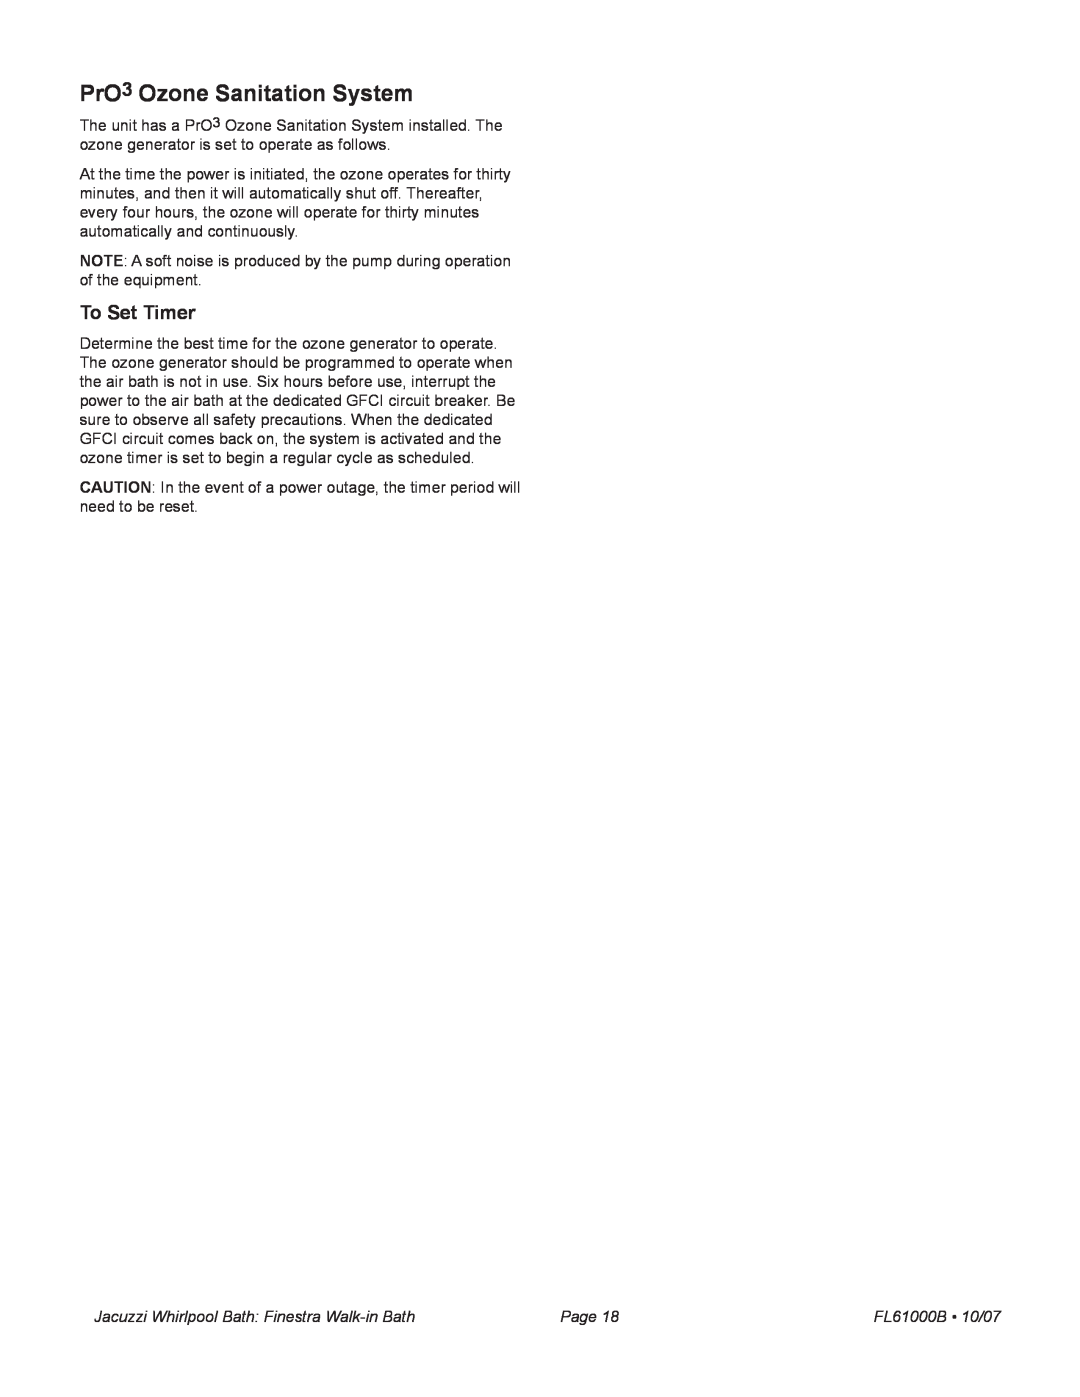 Jacuzzi FL61000 manual To Set Timer, PrO3 Ozone Sanitation System, Jacuzzi Whirlpool Bath Finestra Walk-inBath, Page 